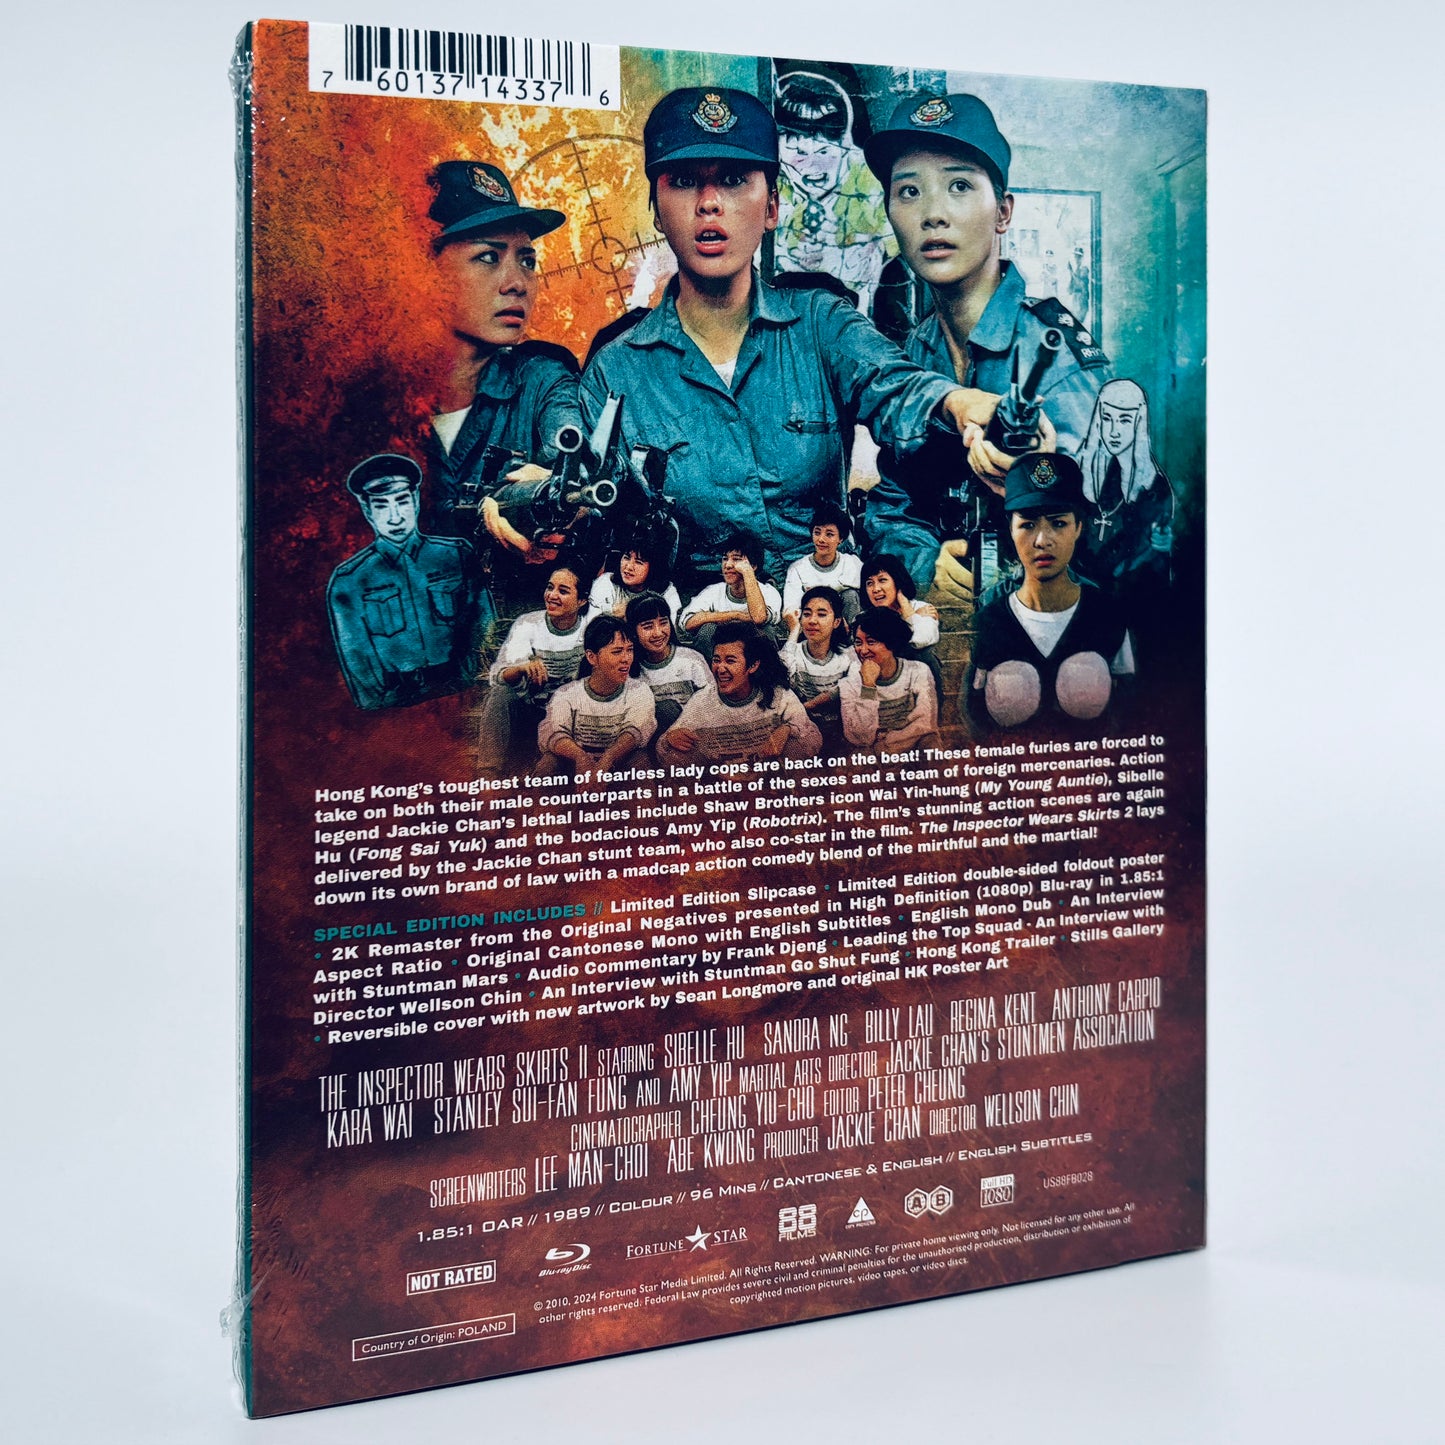 Inspector Wears Skirts 2 II Sibelle Hu Kara Hui Top Squad Blu-ray 88 Films